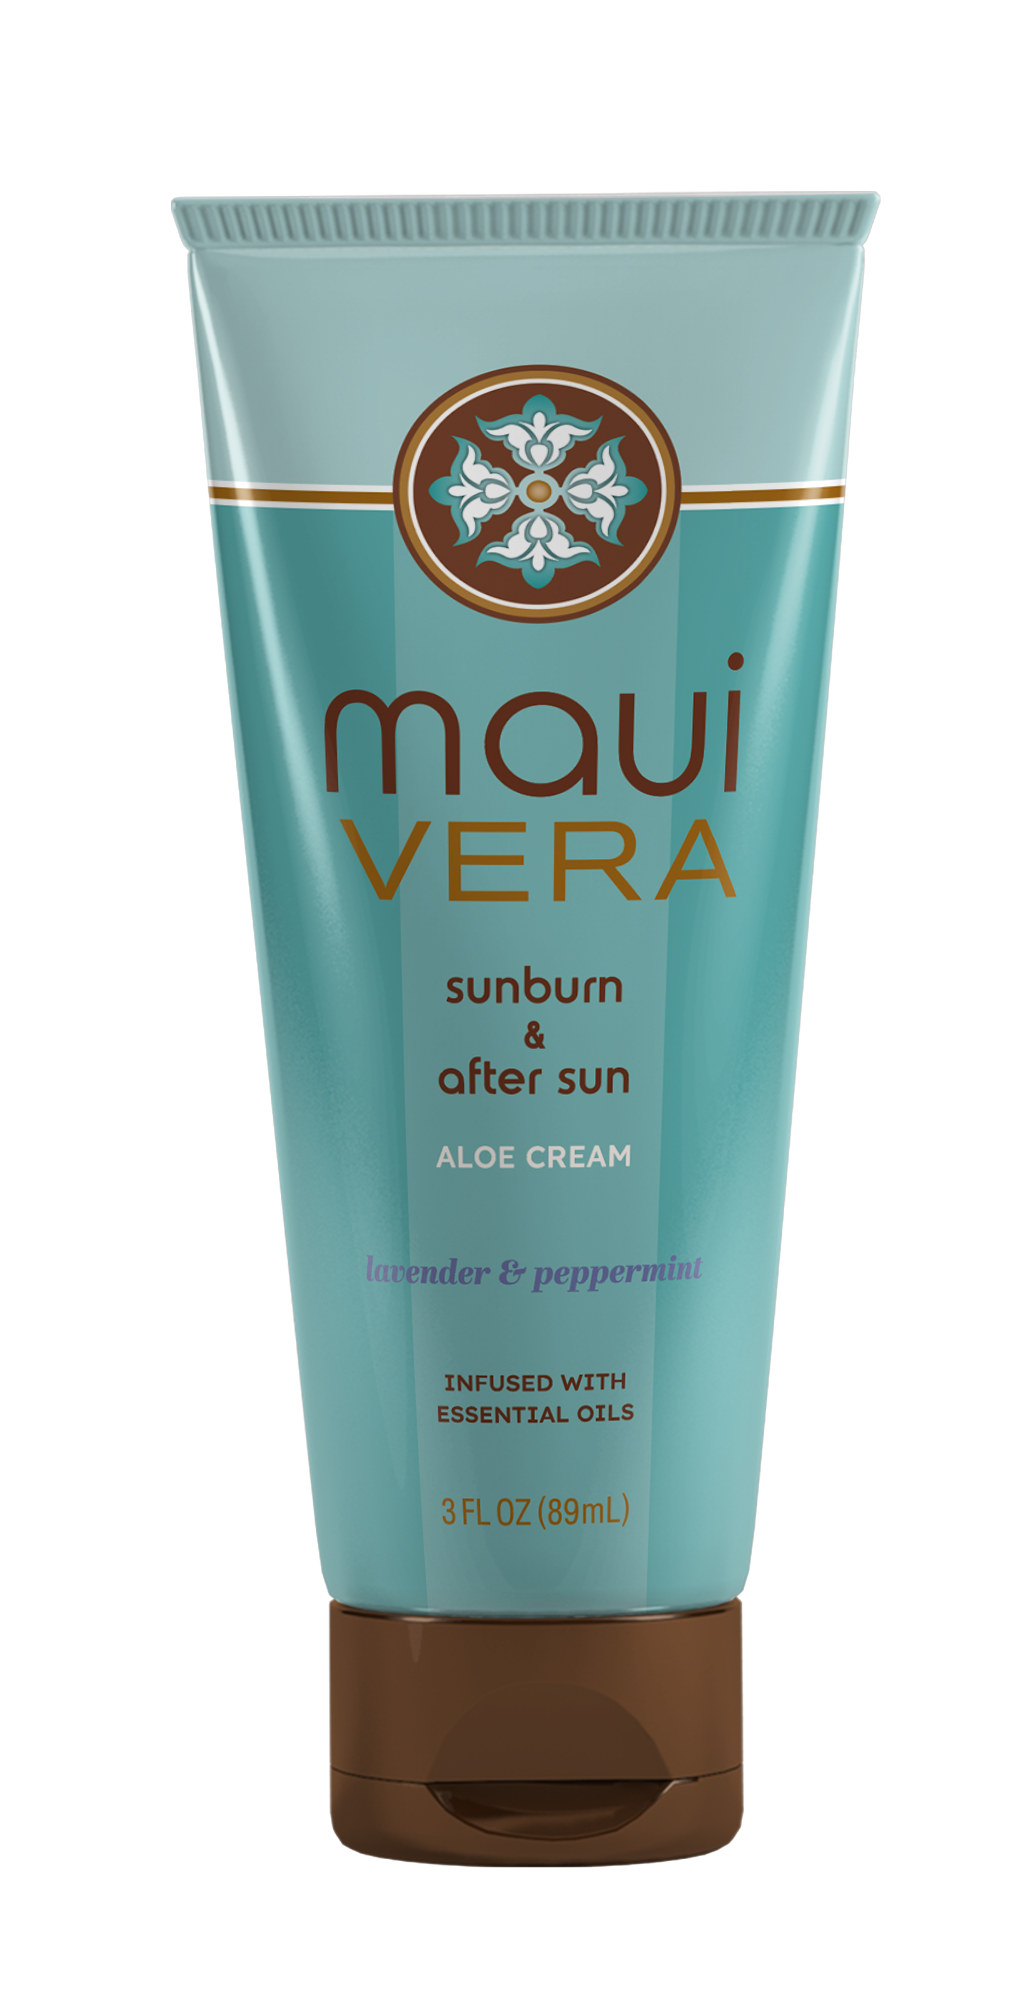 Maui Vera Sunburn and After Sun Aloe Cream